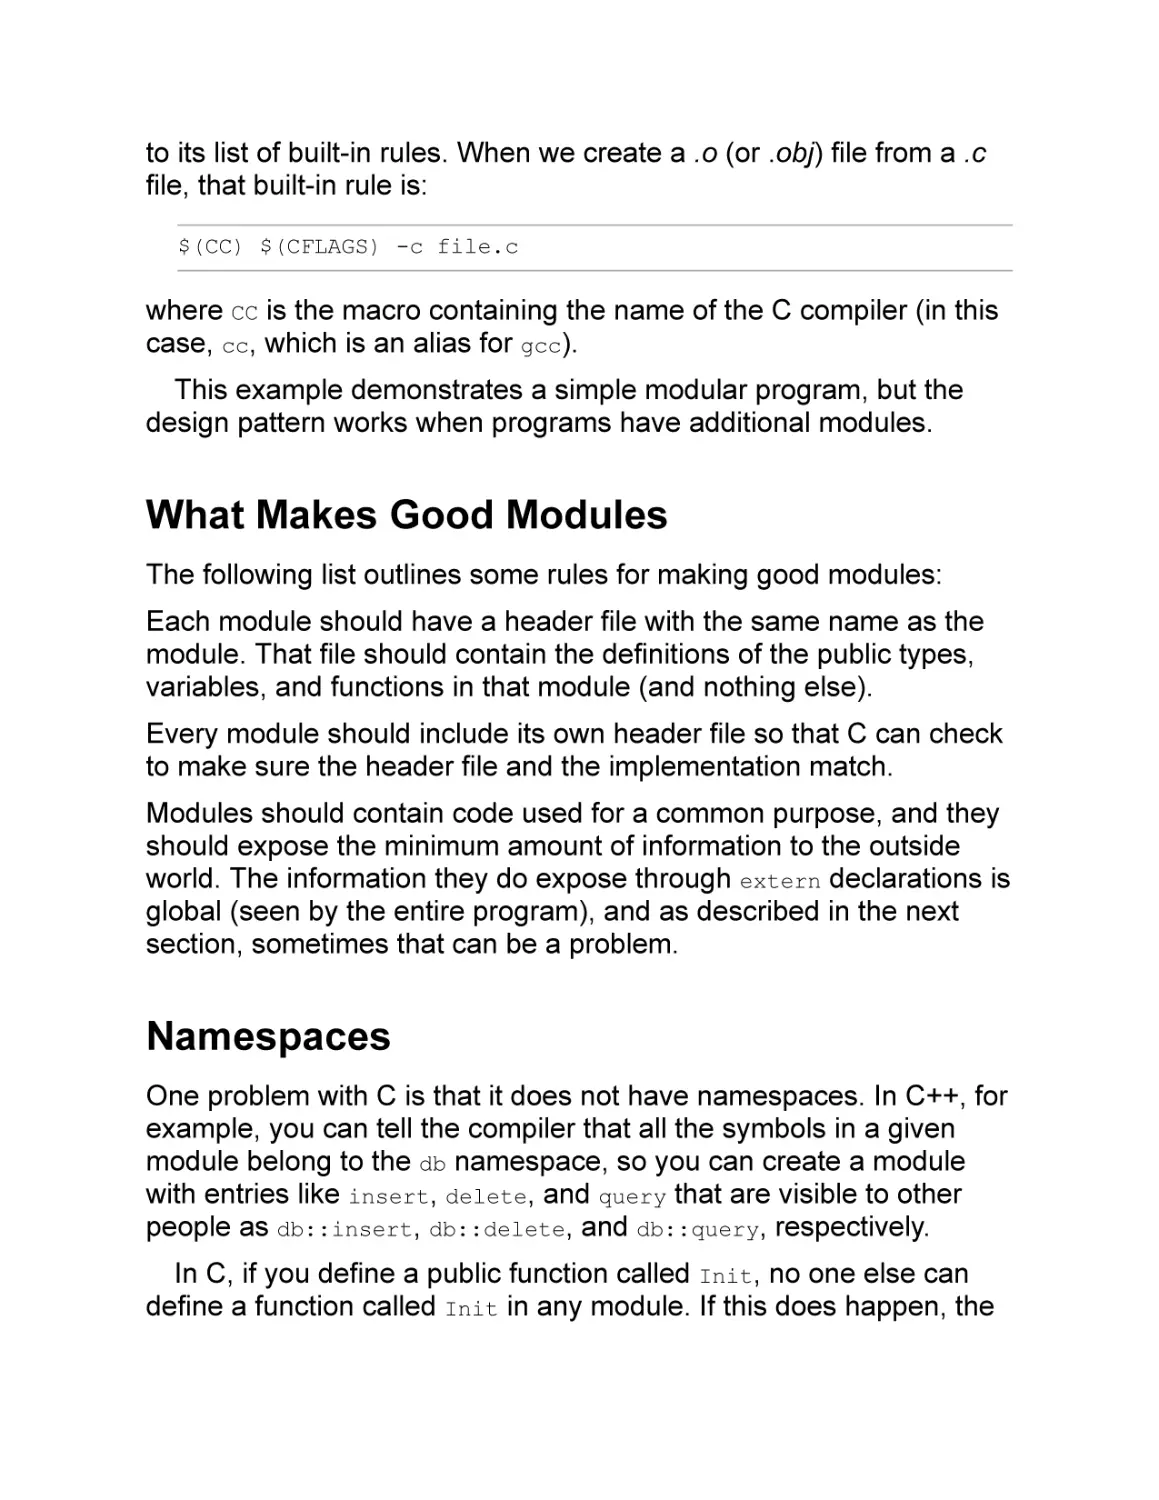 What Makes Good Modules
Namespaces